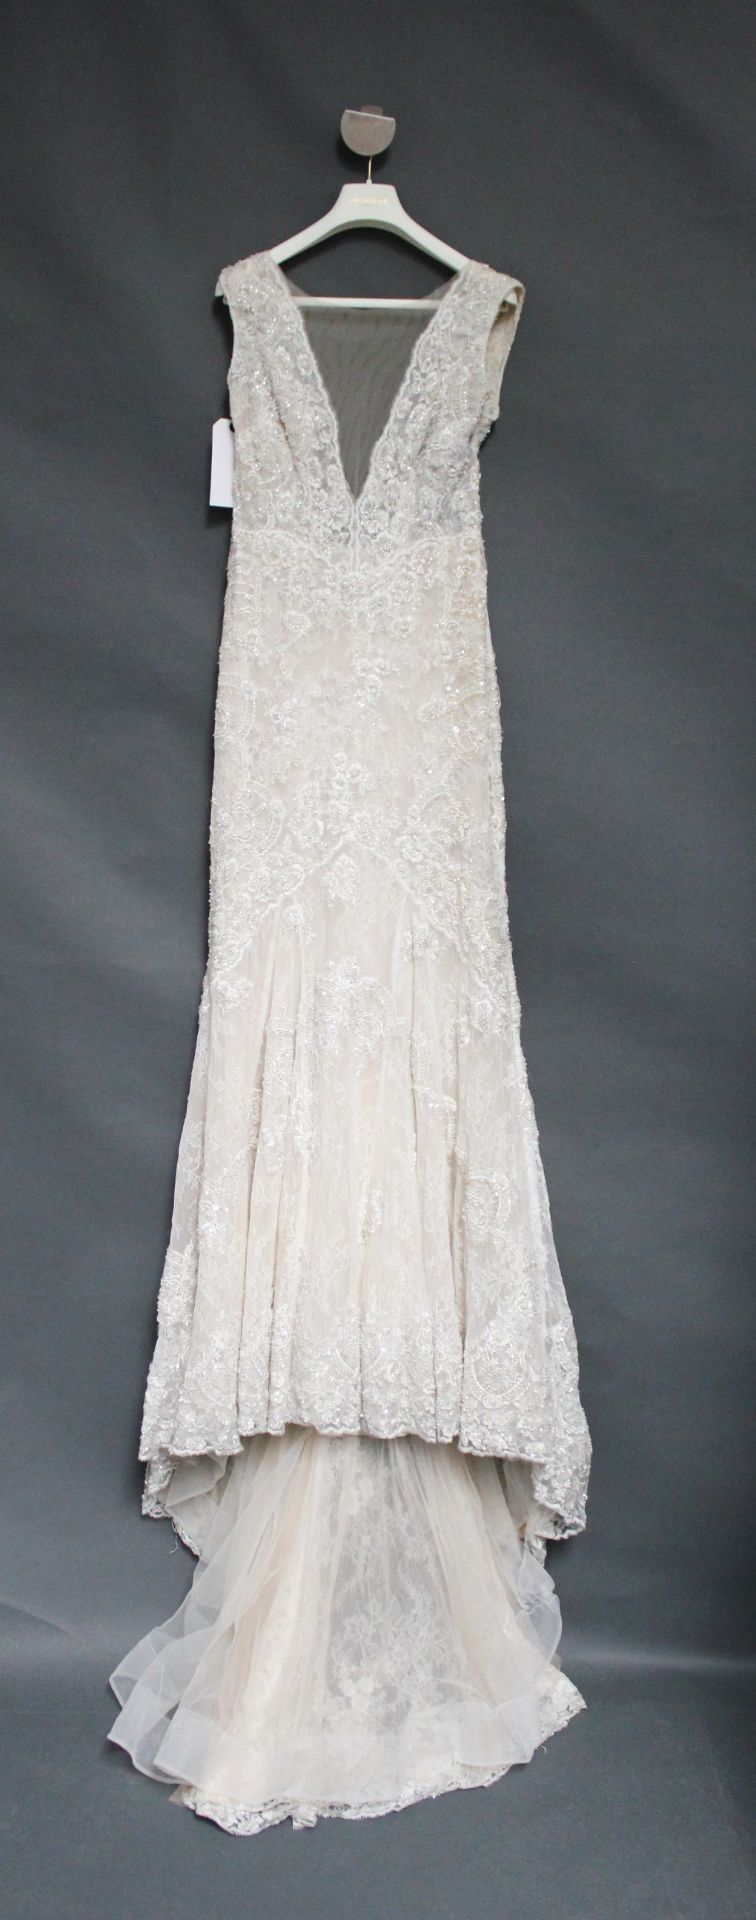 1 x REBECCA INGRAM 'Gabriella' Sleeveless Lace And Beaded Designer Wedding Dress RRP £1,400 UK12 - Image 3 of 6